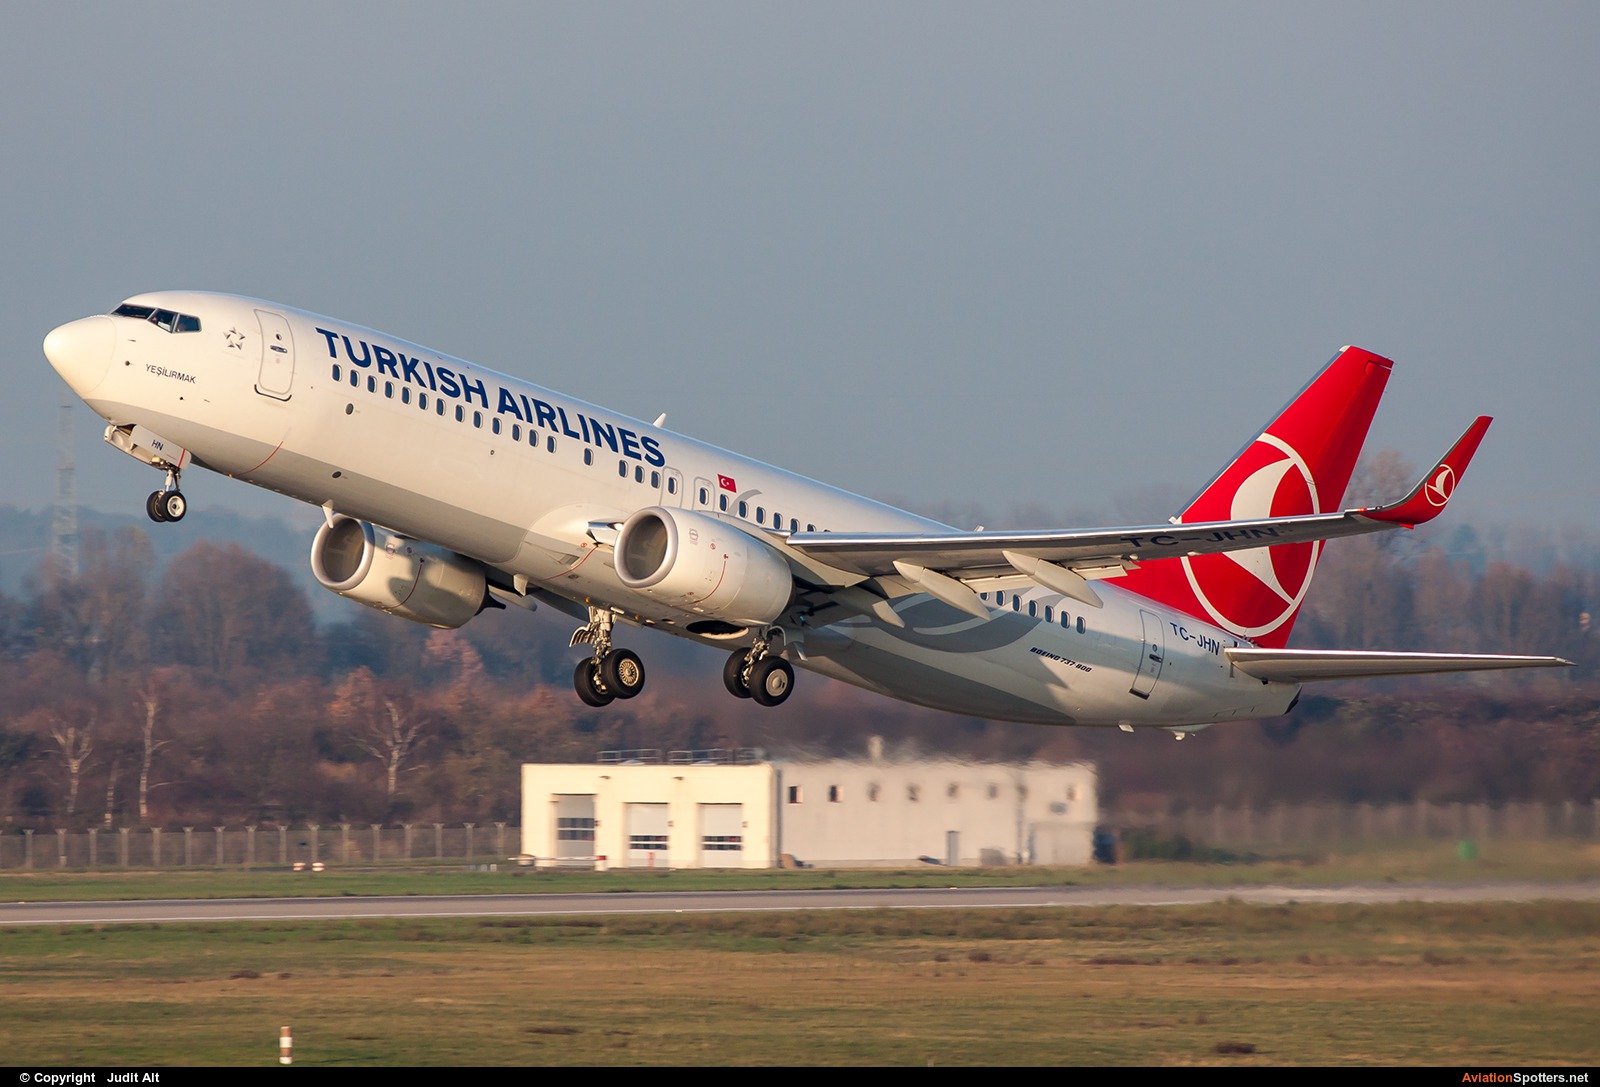 Turkish Airlines  -  737-800  (TC-JHN) By Judit Alt (Judit)